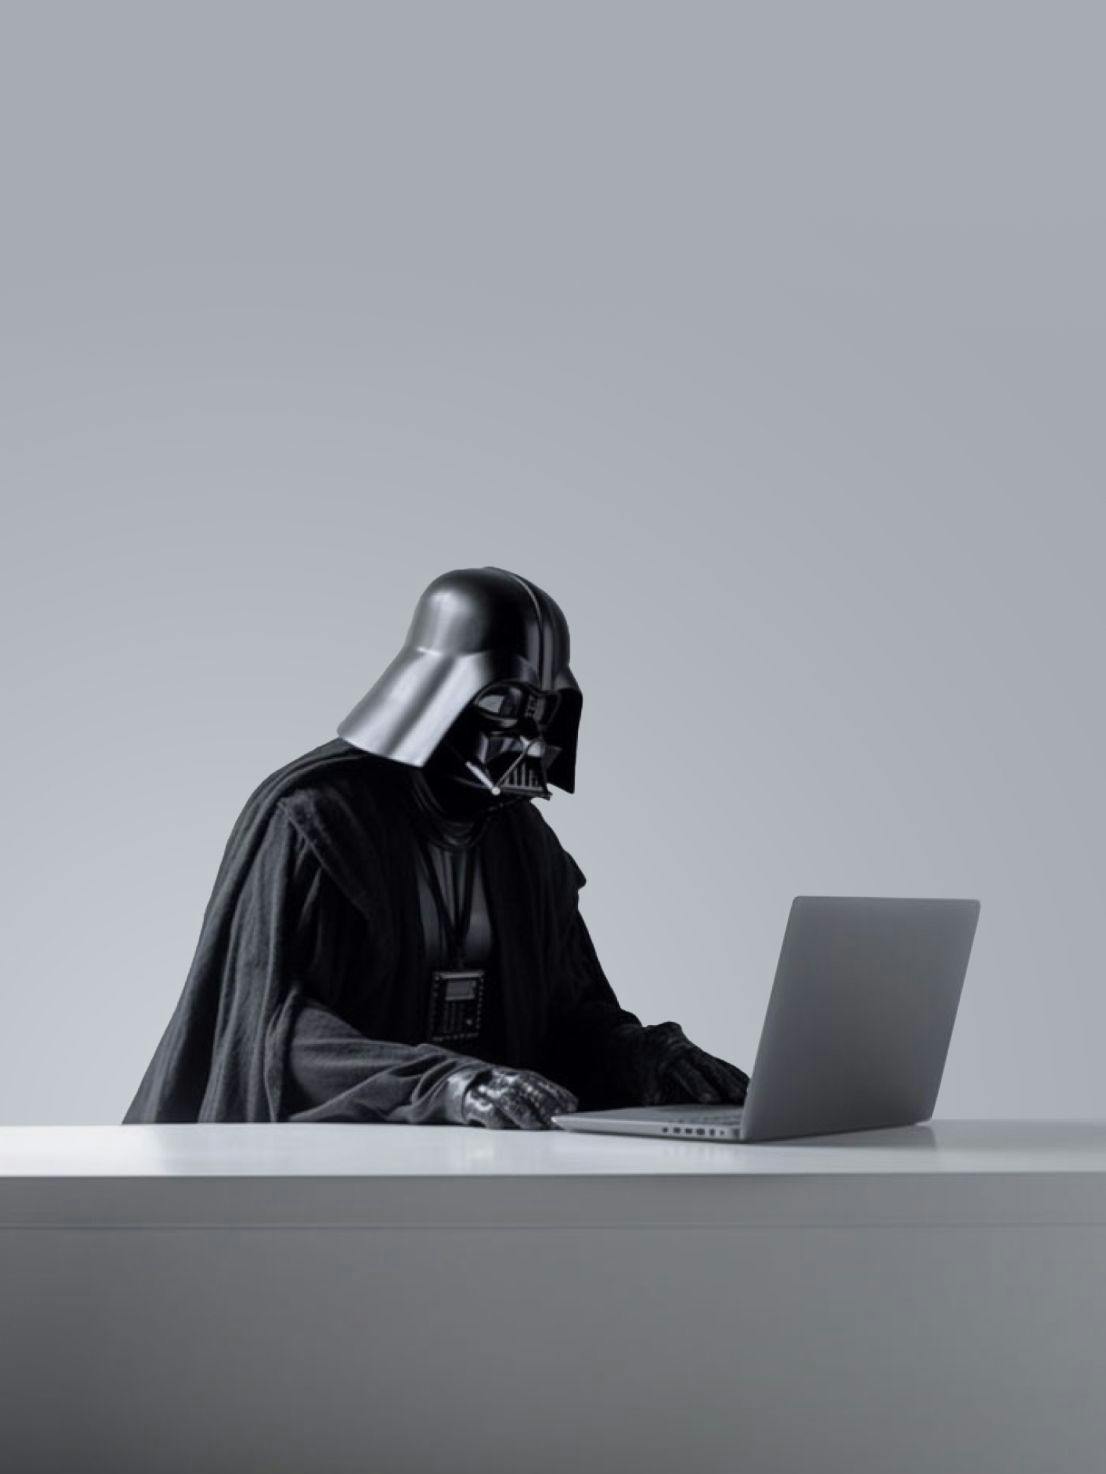 Darth Vader working on computer